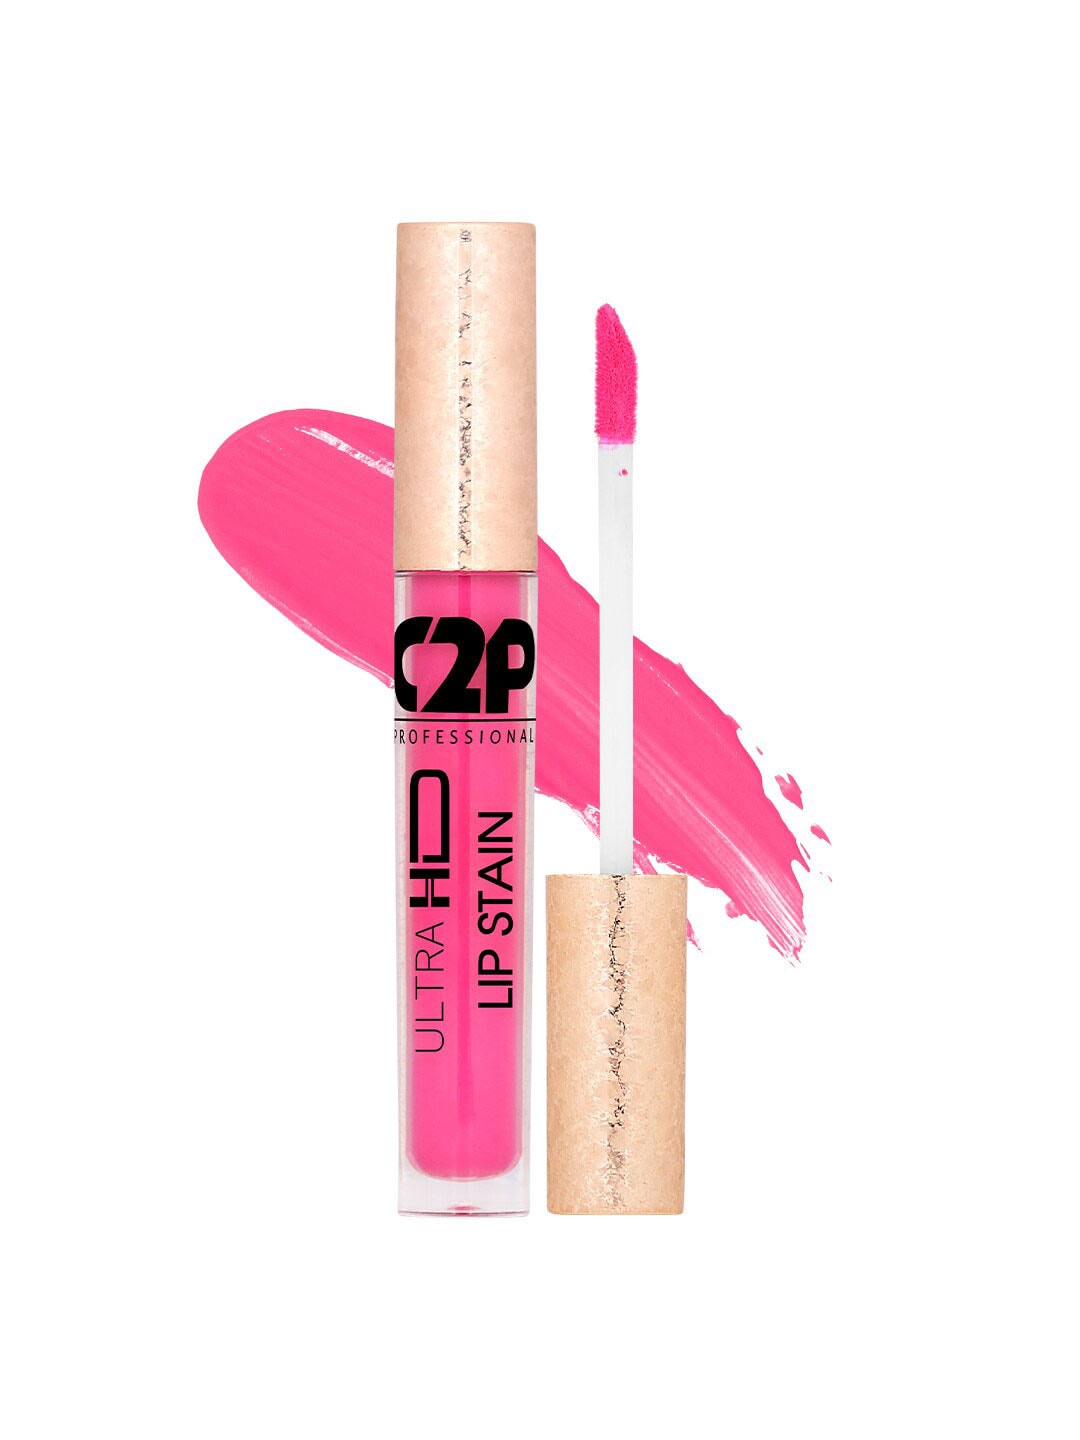 C2P PROFESSIONAL MAKEUP Lip Stain Liquid Lipstick - Fire N' Ice 22 5ml Price in India